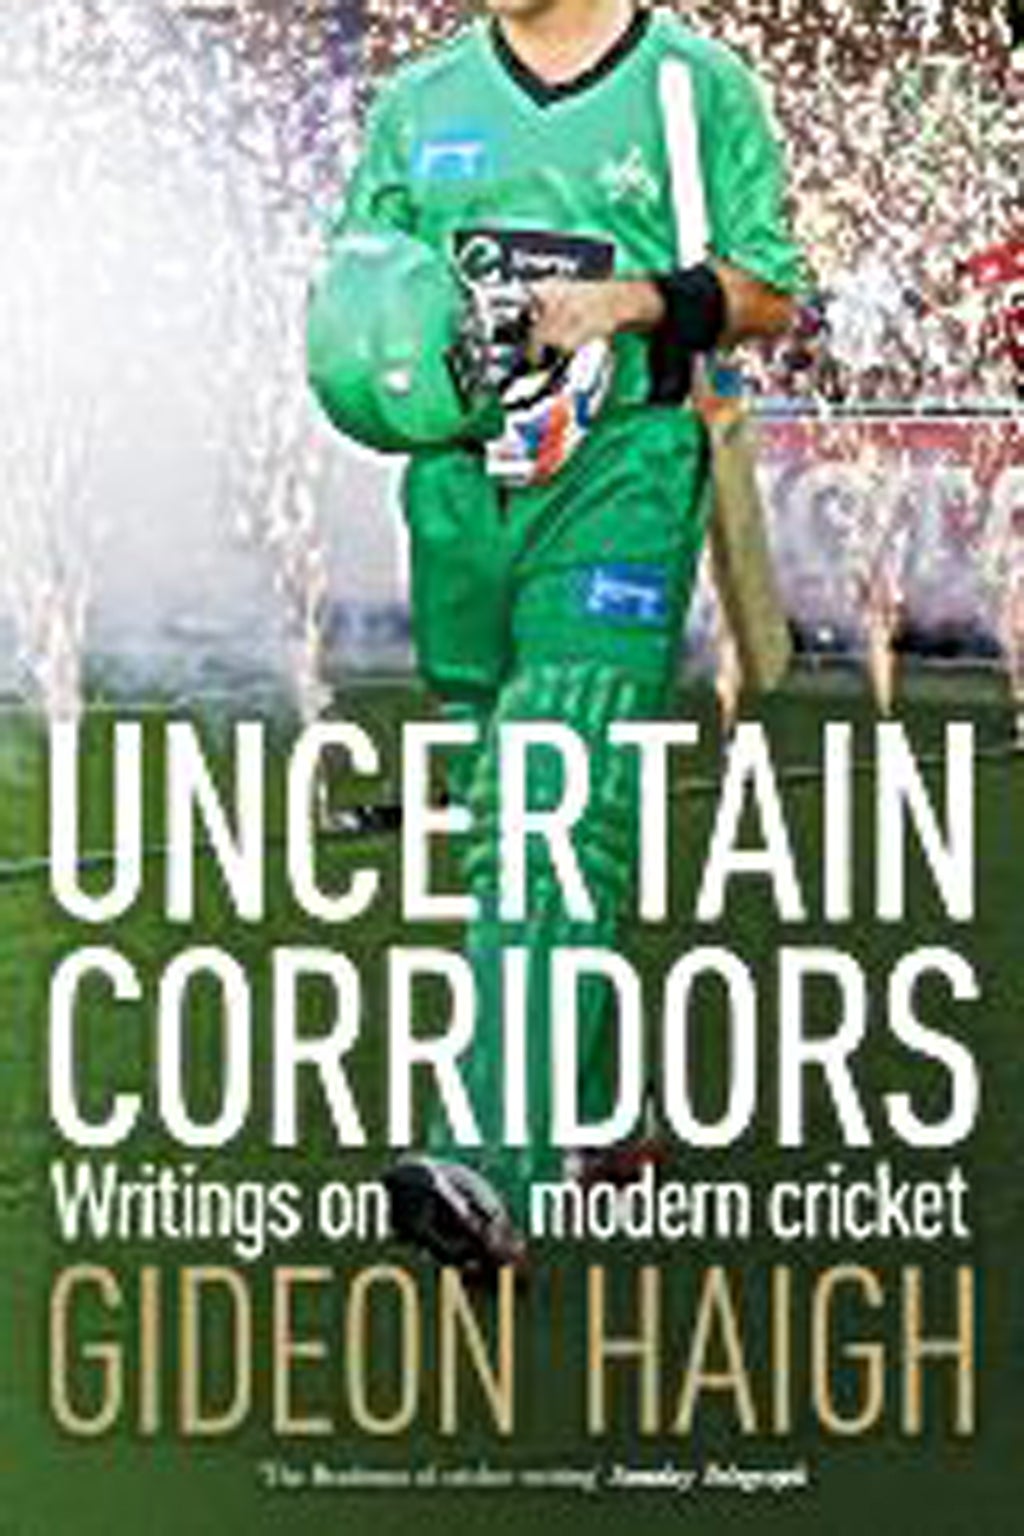 Uncertain corridors: Writings on modern cricket by Gideon Haigh